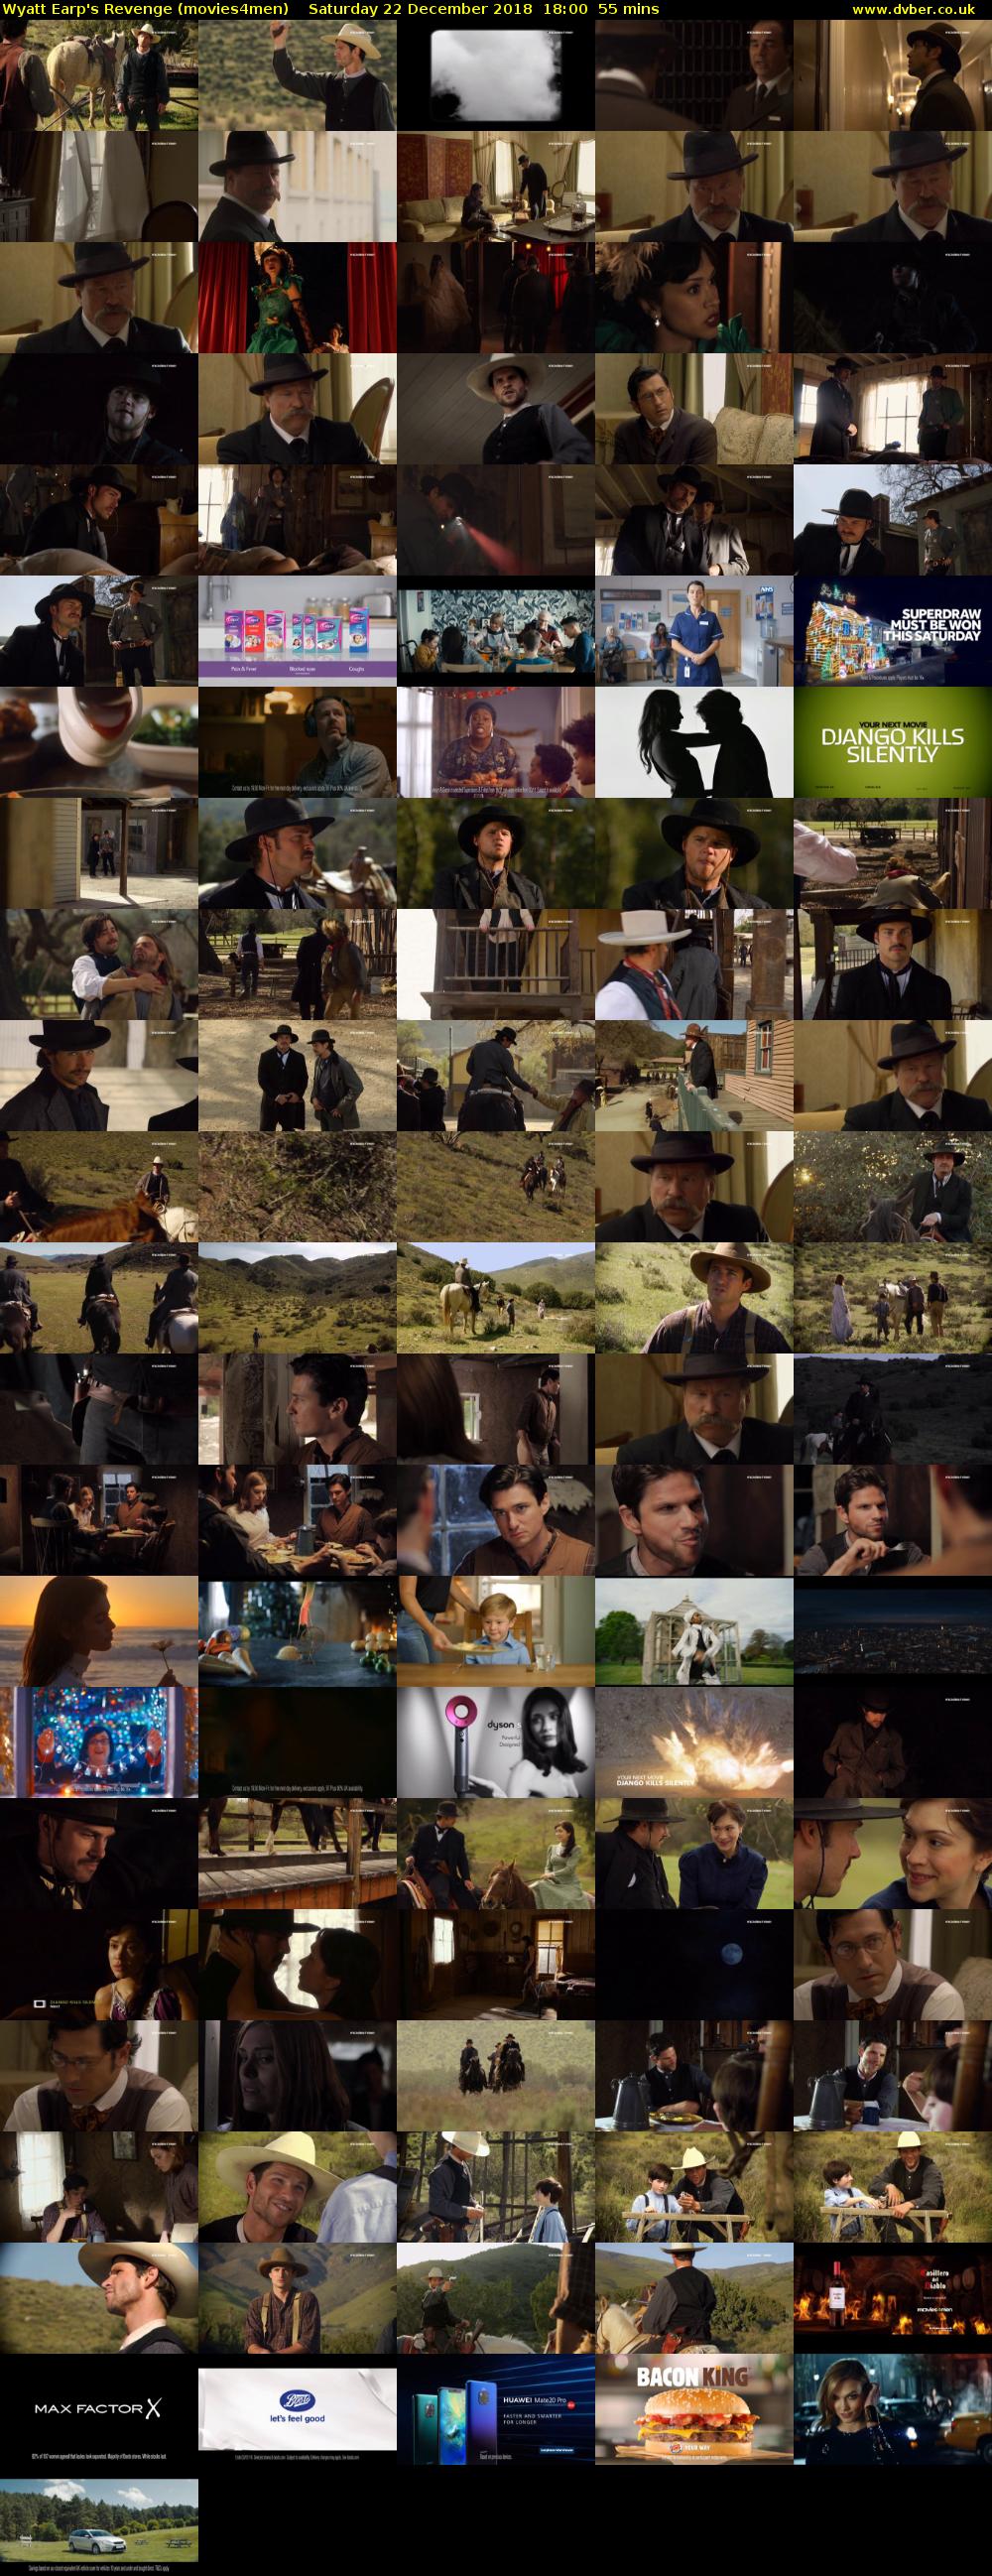 Wyatt Earp's Revenge (movies4men) Saturday 22 December 2018 18:00 - 18:55